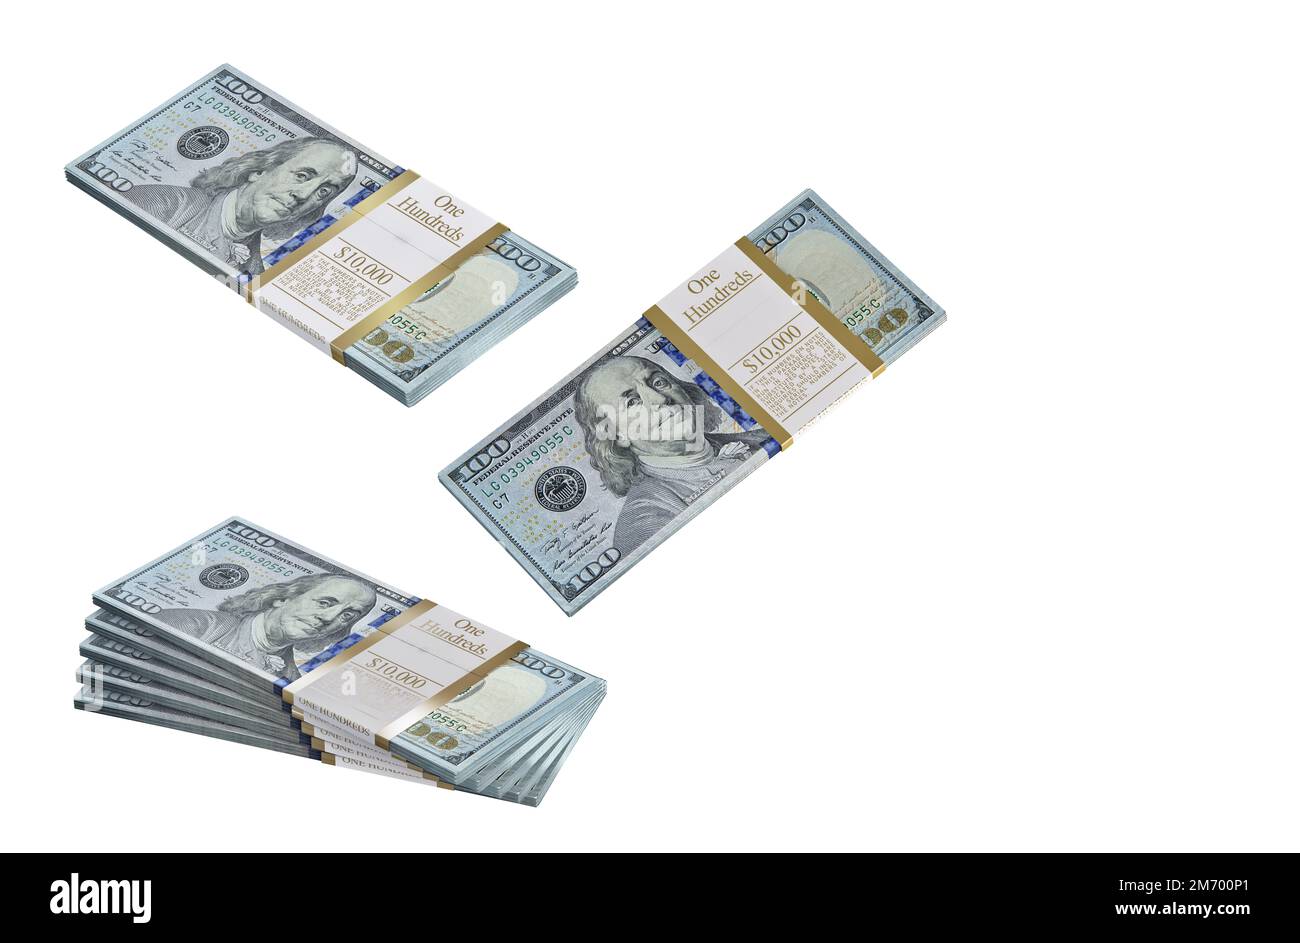 100 US Dollar bills banknotes bundles isolated on white background. American money, dollars fresh stacks closeup design element. Success, investment Stock Photo